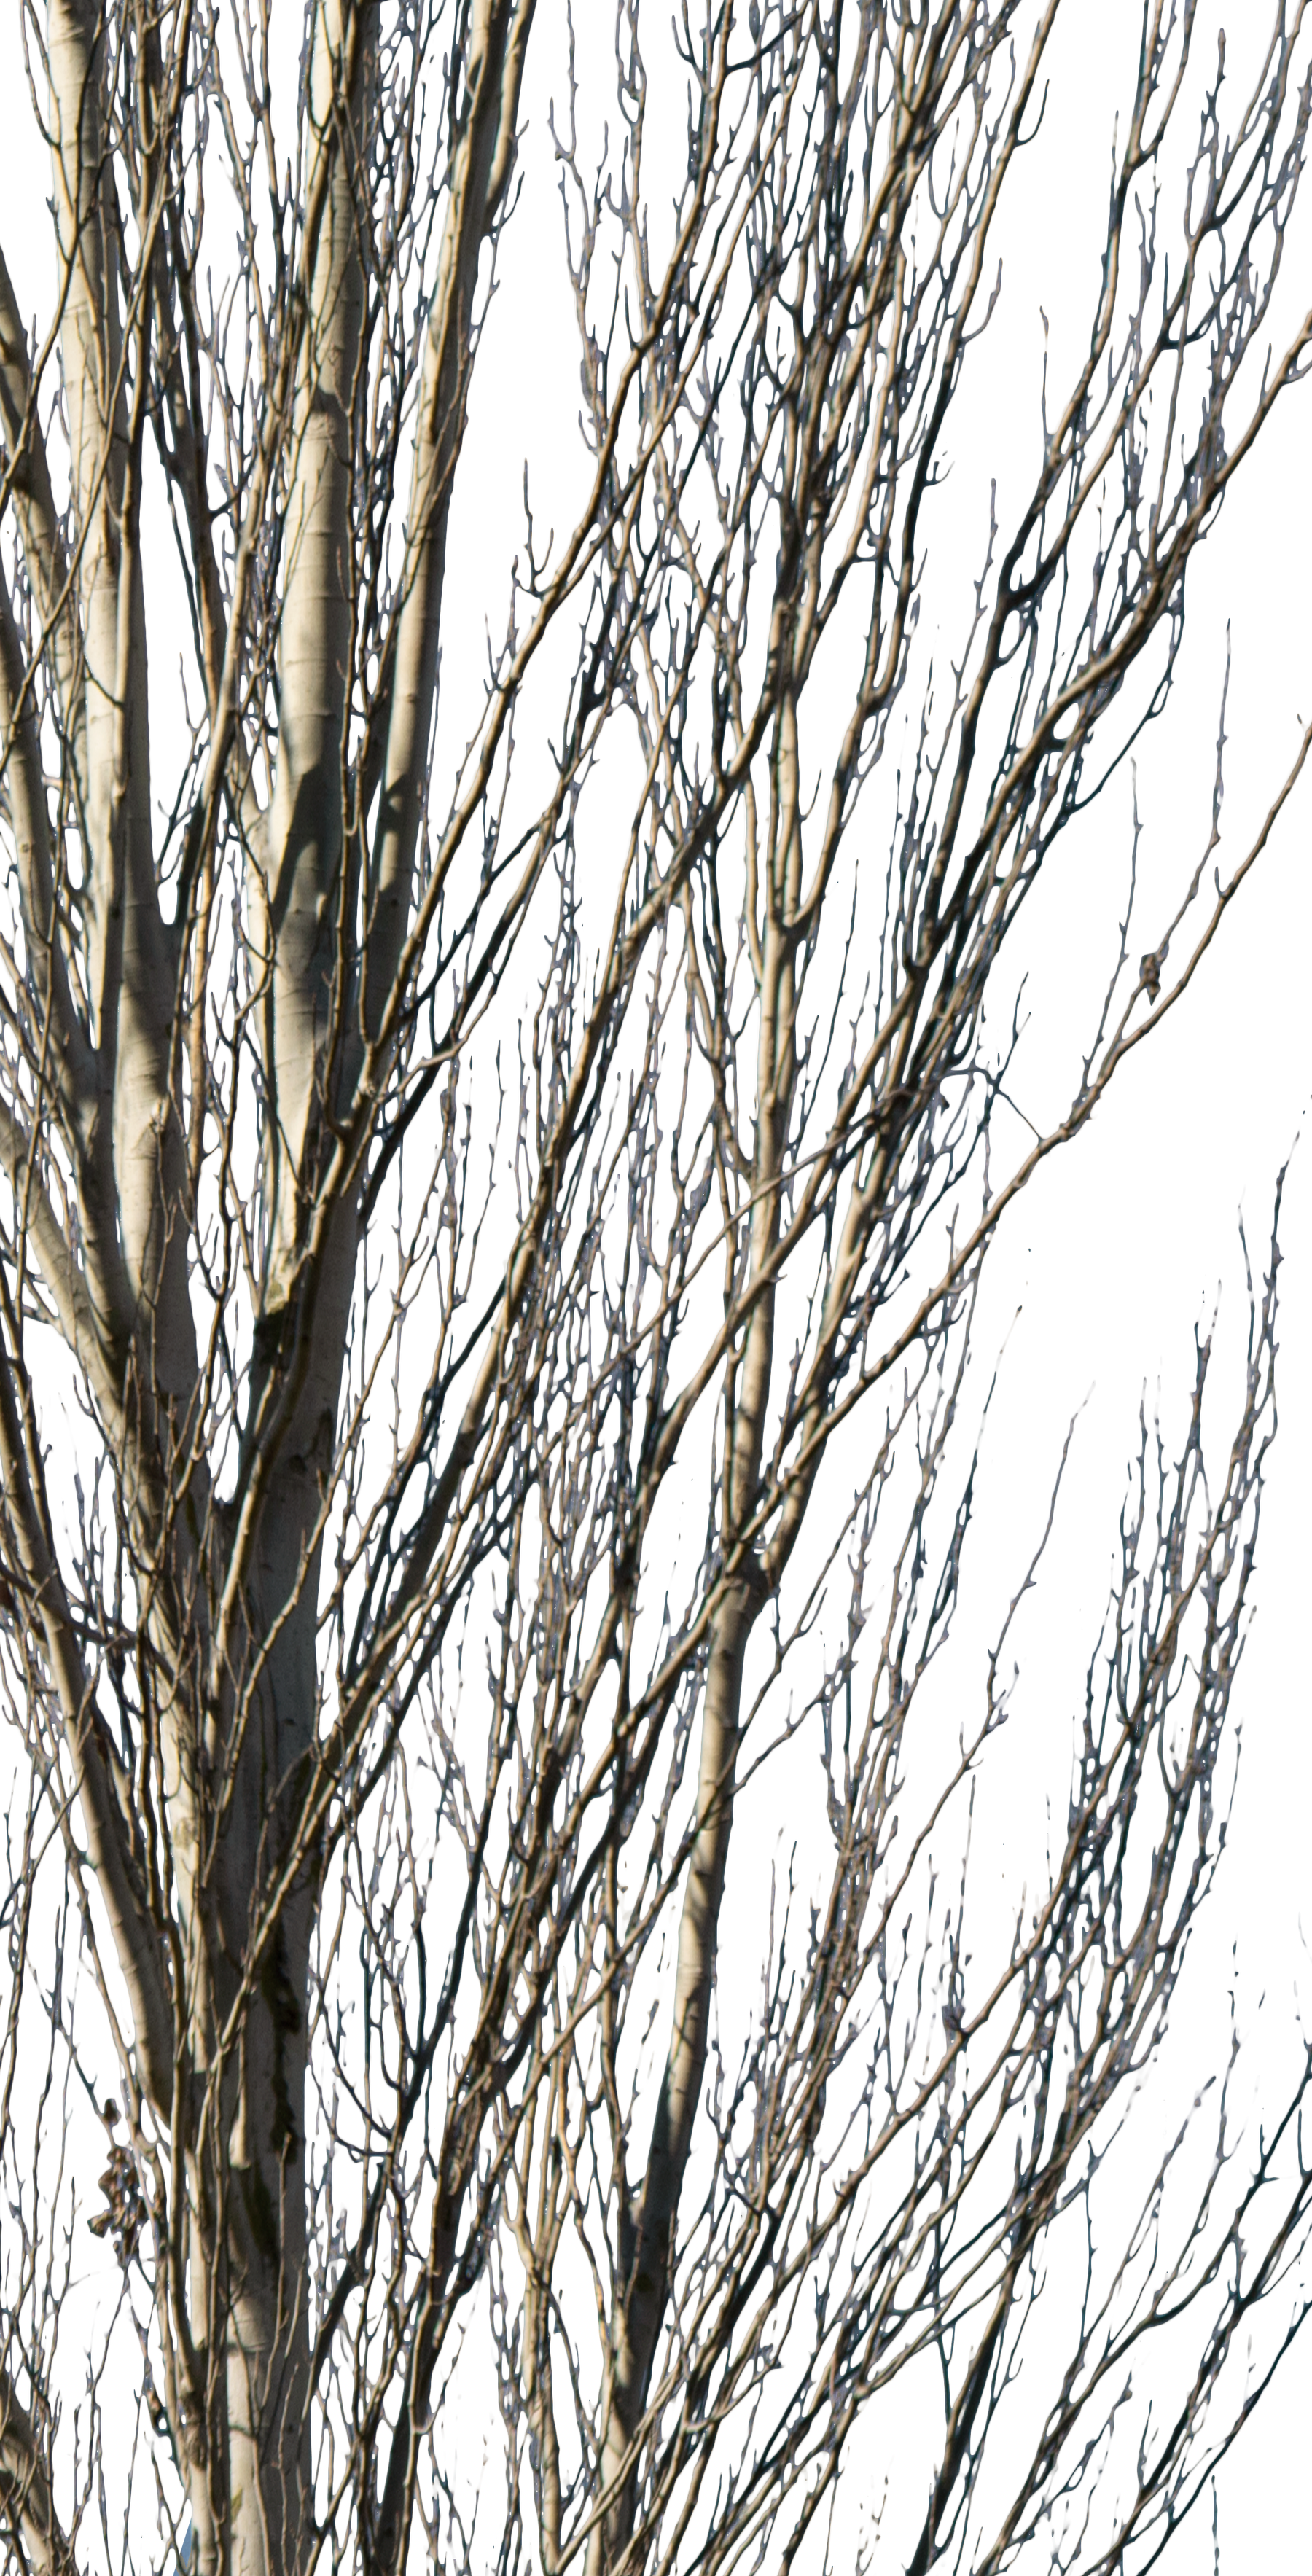 Populus alba winter III - cutout trees